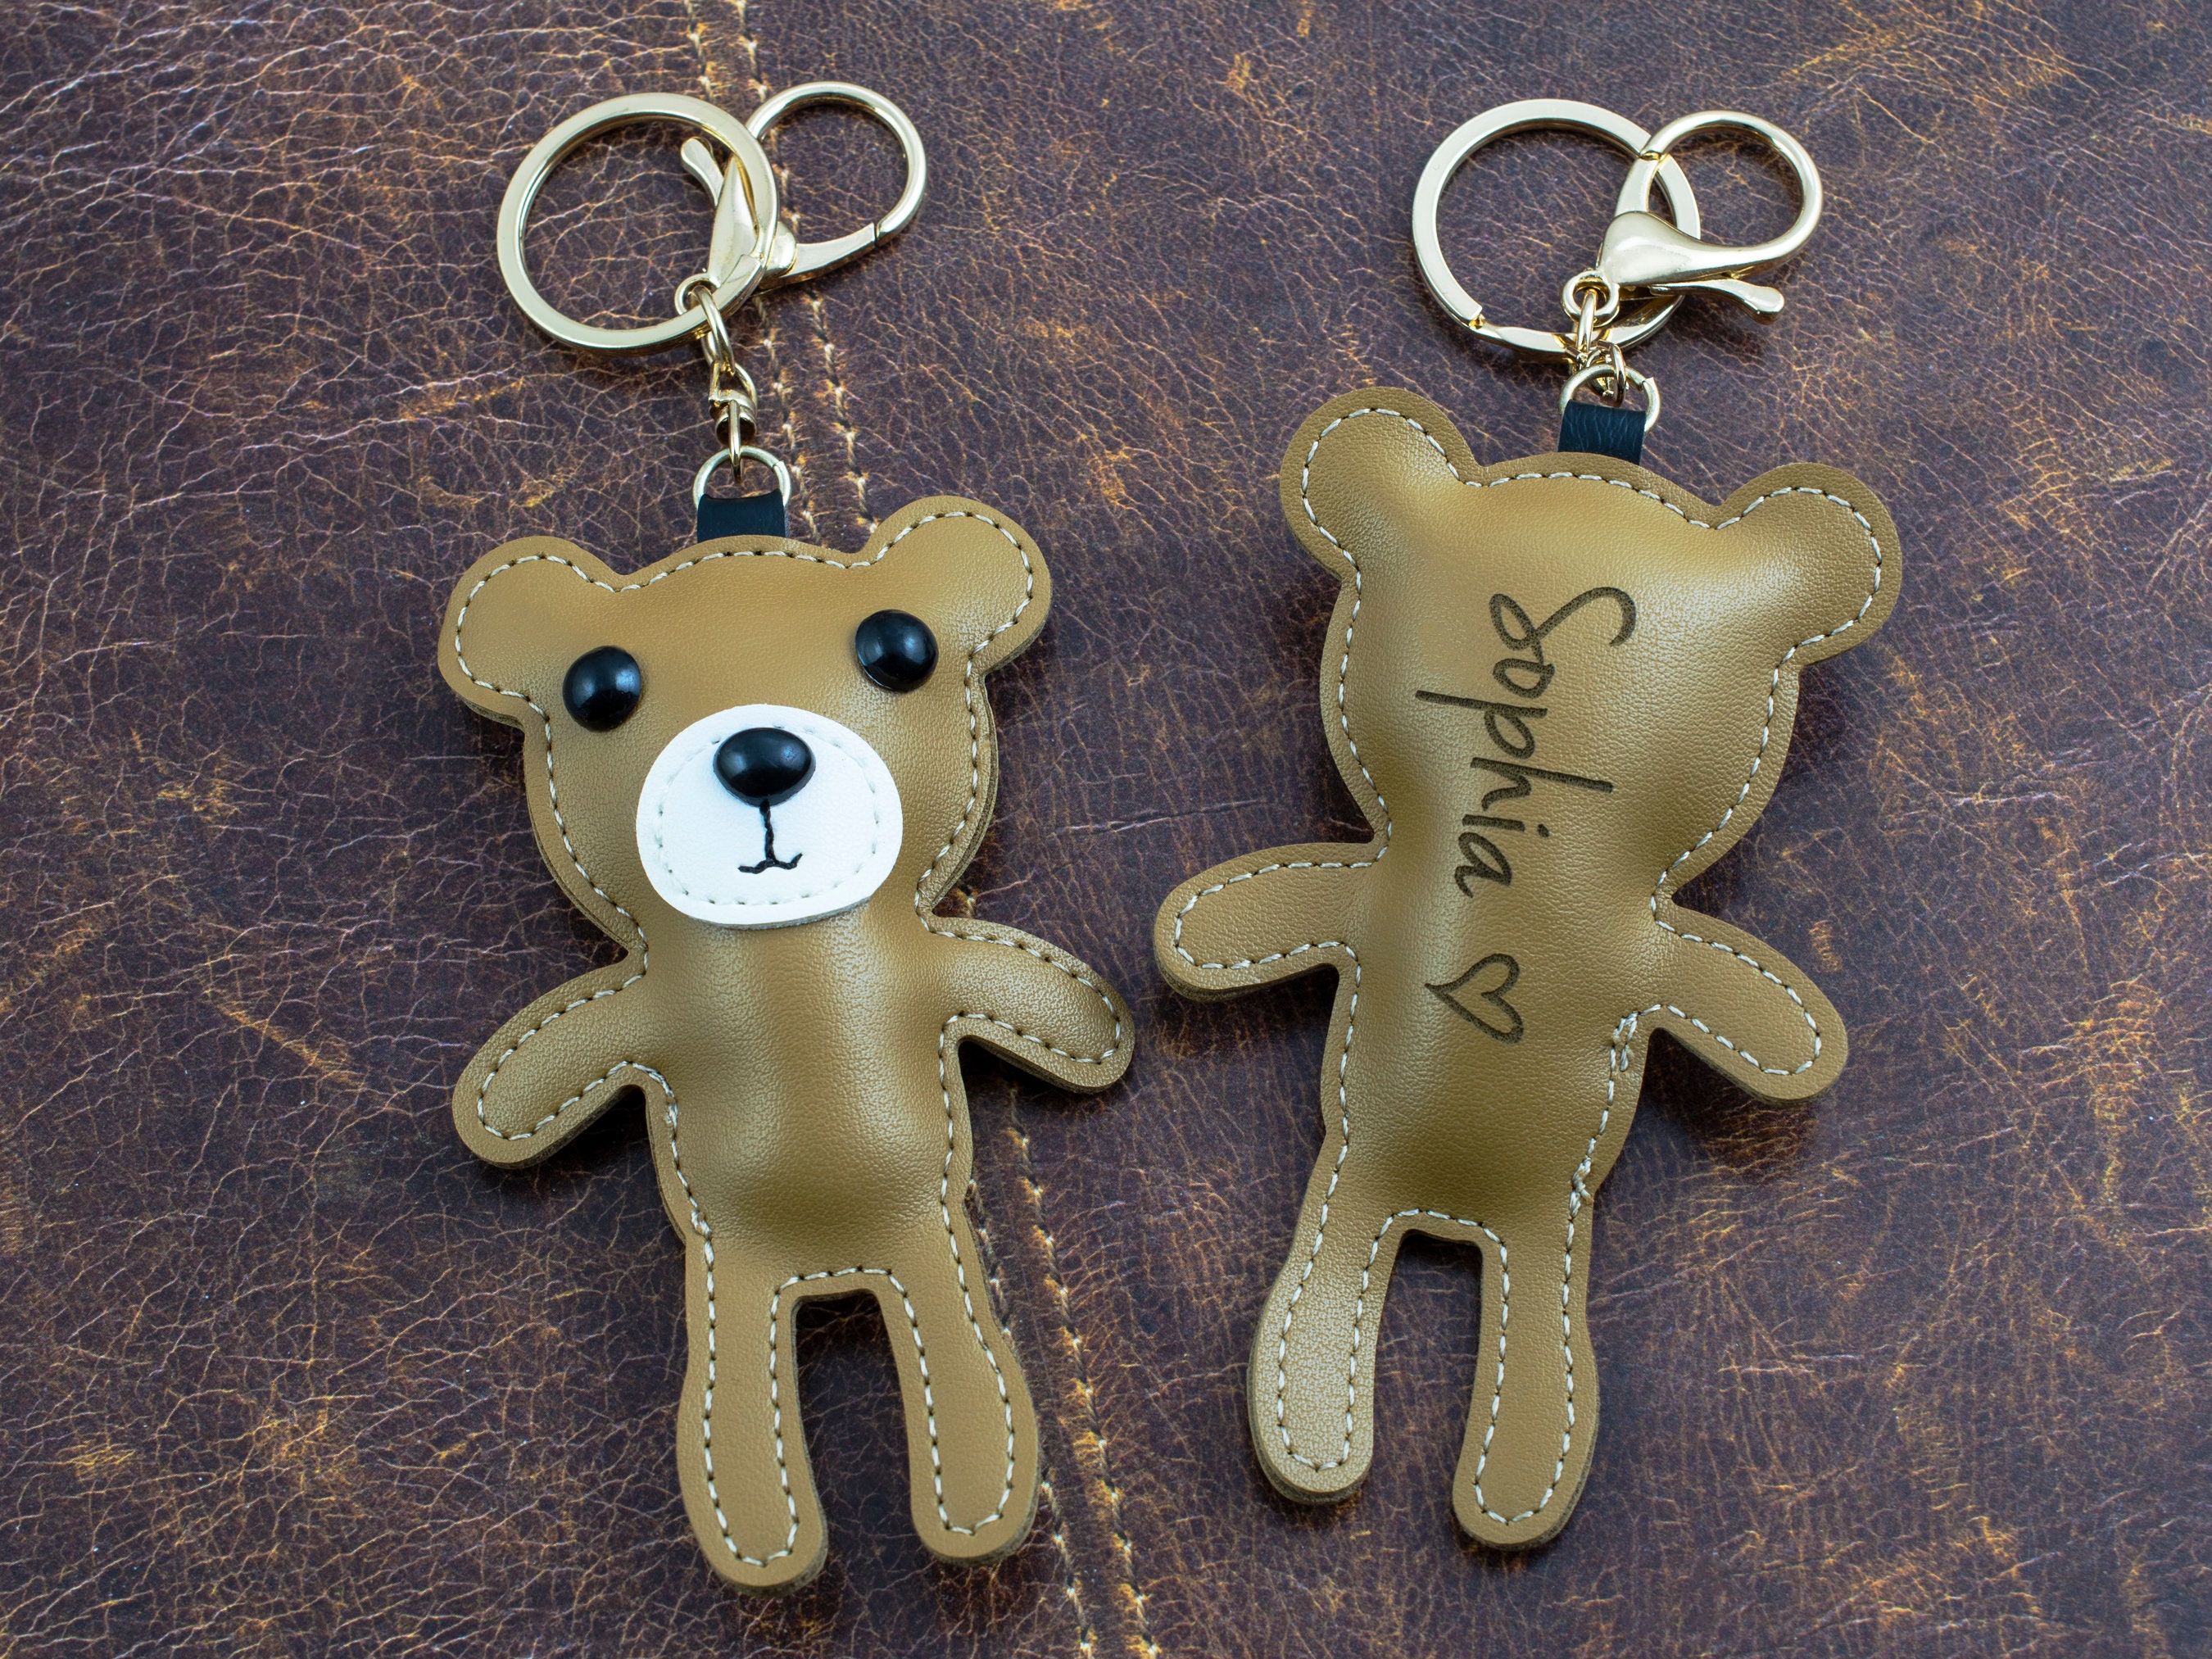 QuyetCoinDirtyShop Luxury Keychain with Bear Lanyard for Bag Luggage Car Keys Chain with Bear | Designer Keychain | Stylish Leather Key Chain with Bear Cute